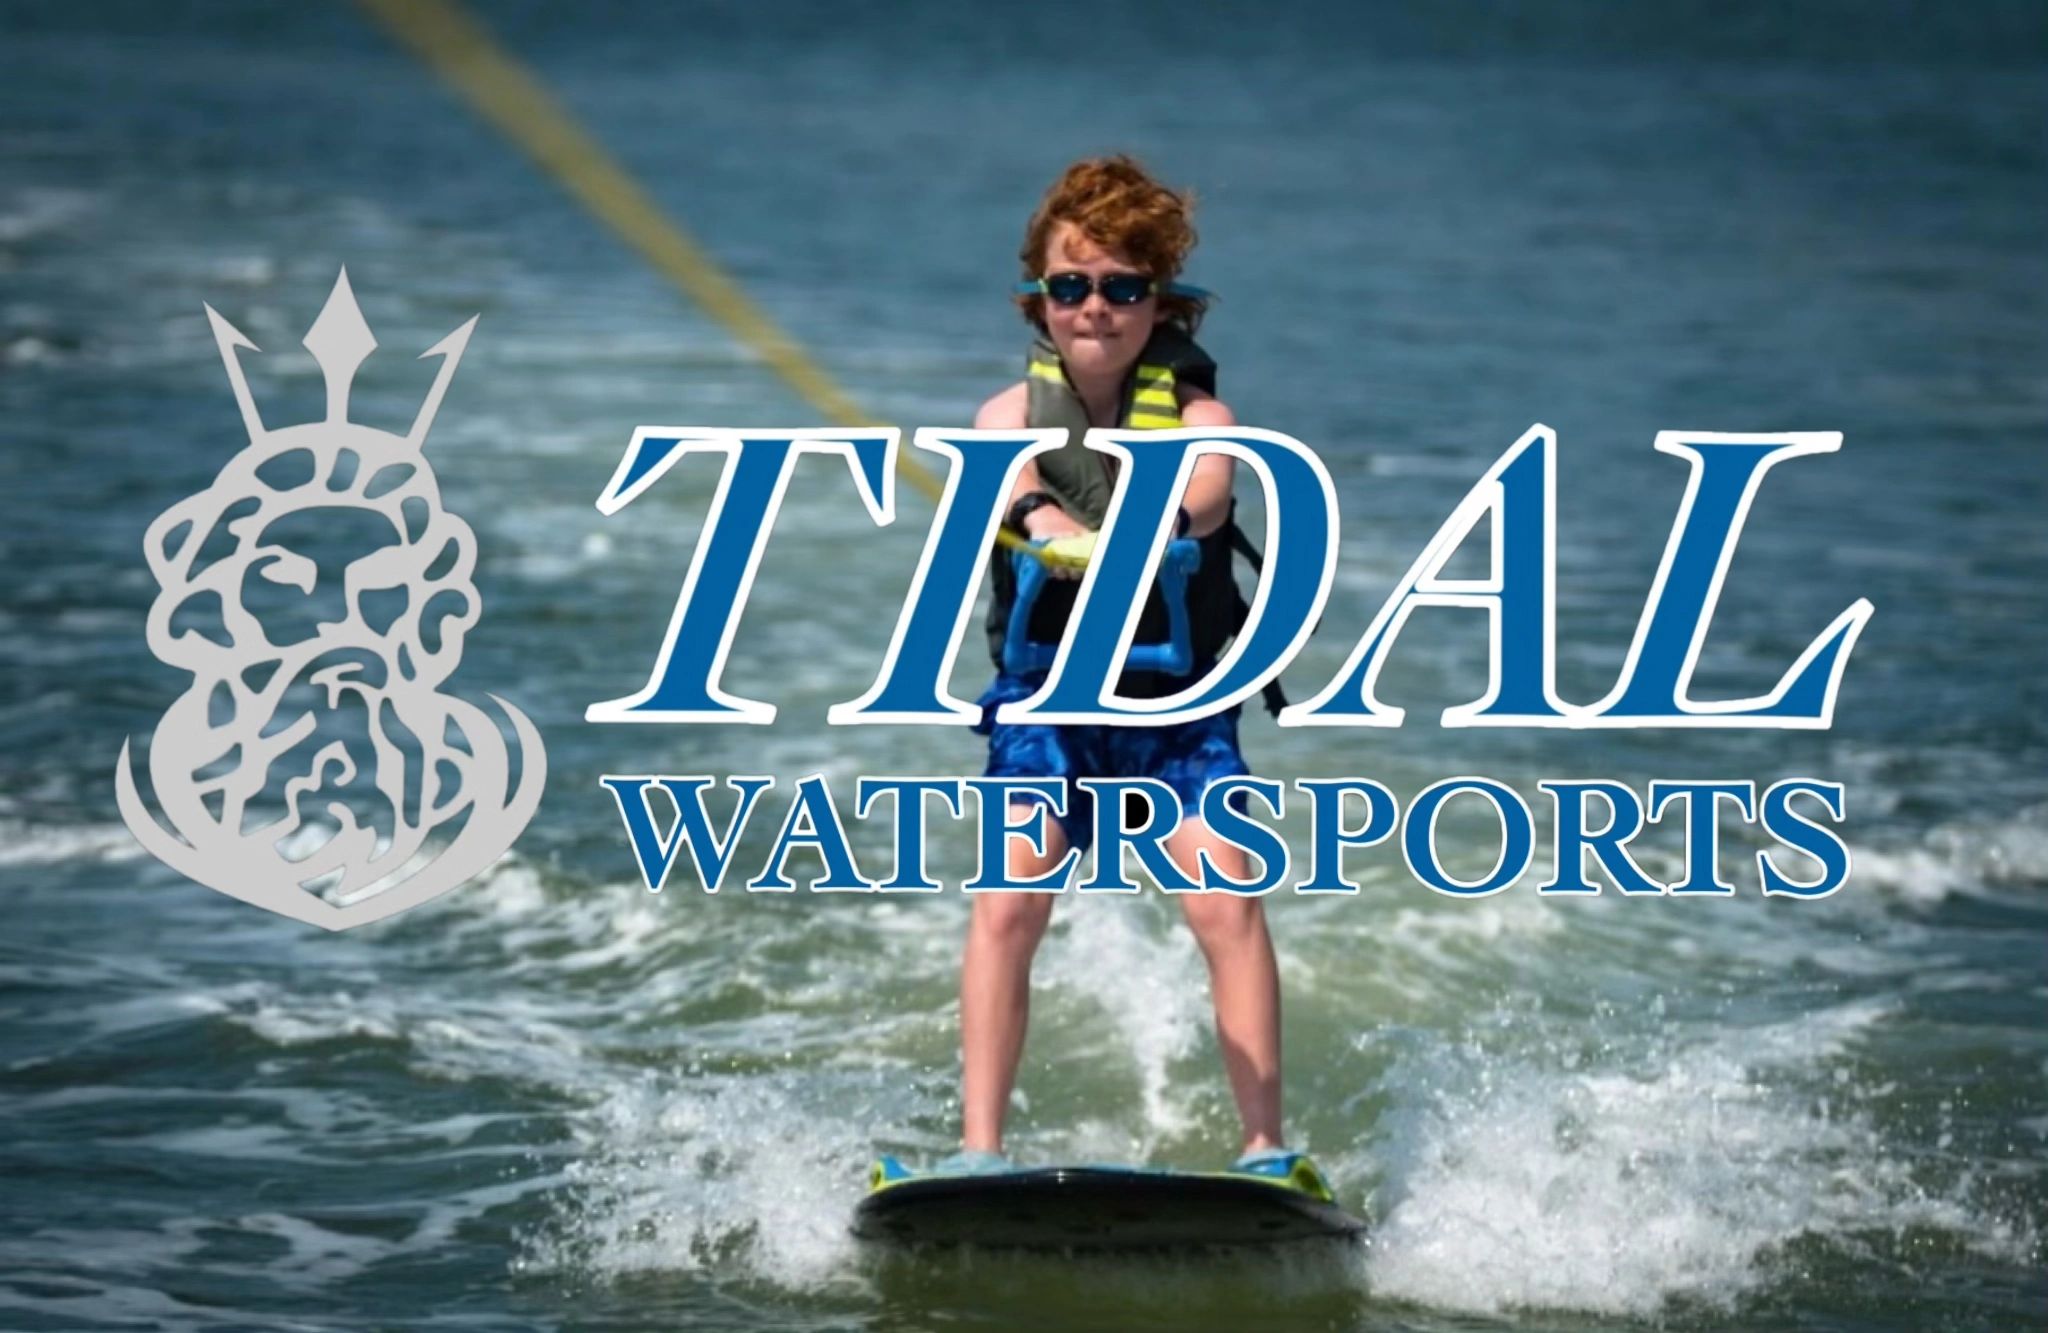 Fun things to do in Delray Beach
watersports, tubing, wakeboarding, kayaks, jetskiing, activities,